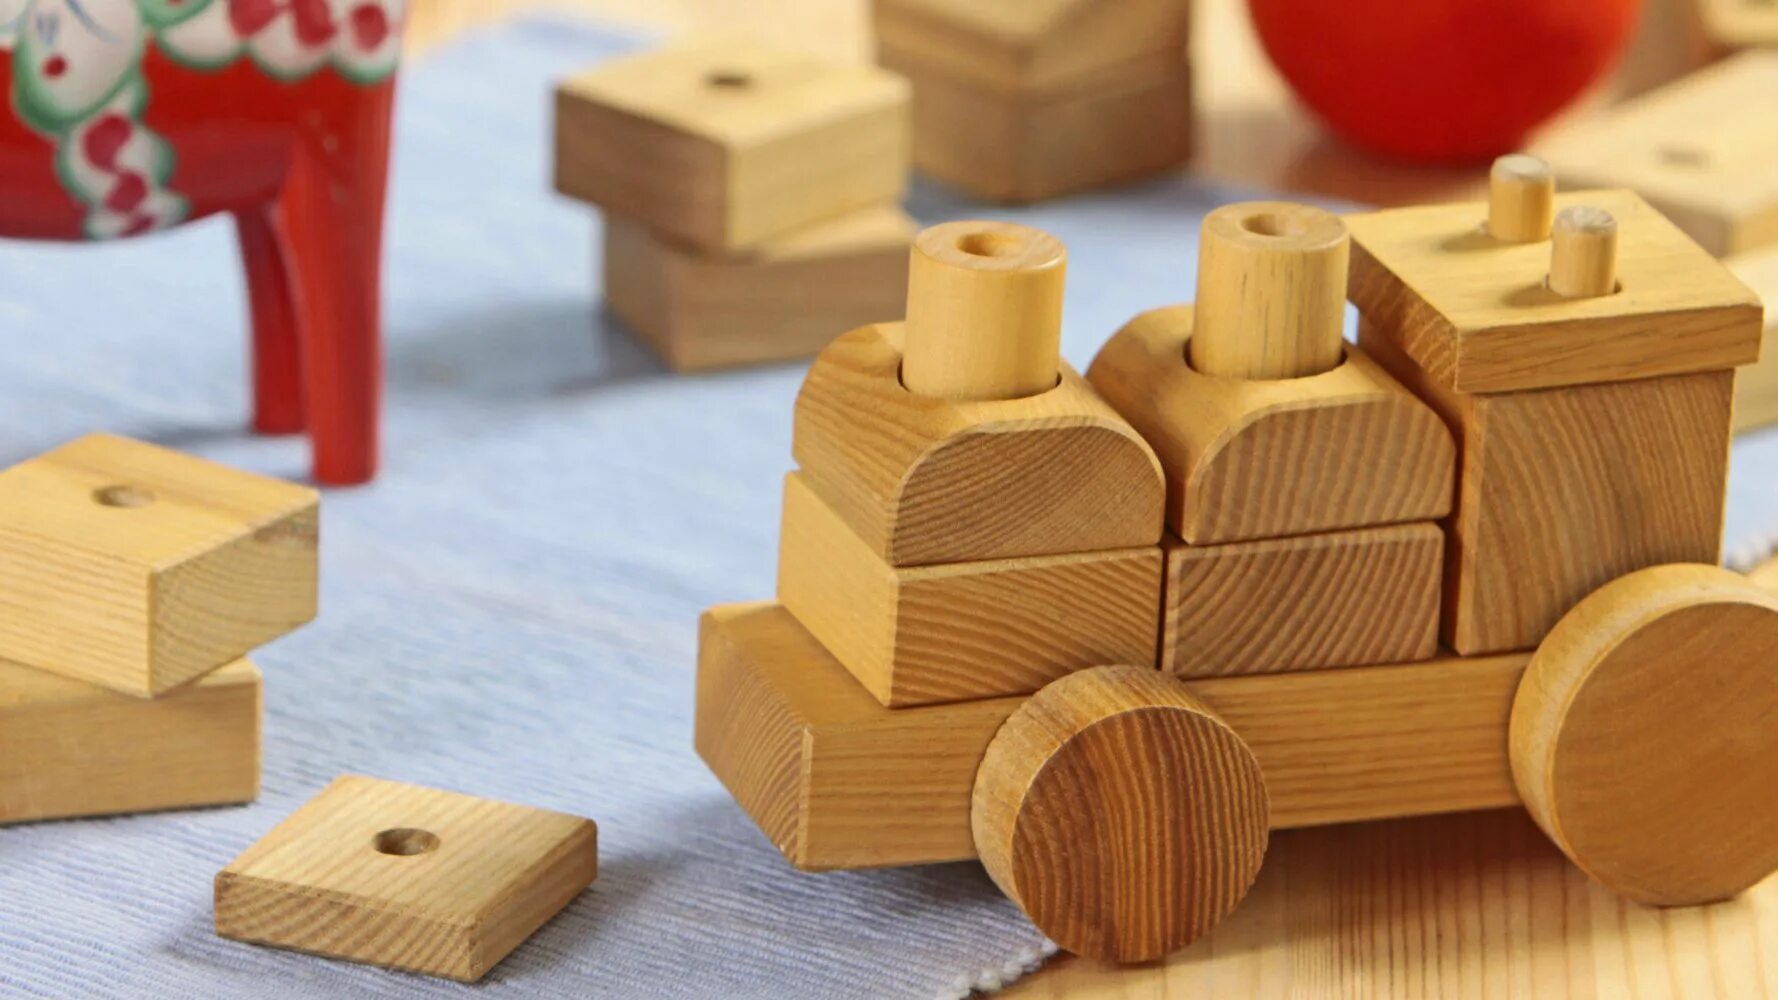 More wooden most wooden. Деревянные игрушки. Деревянные игрушки для детей. Красивые деревянные игрушки. Детские игрушки из дерева.